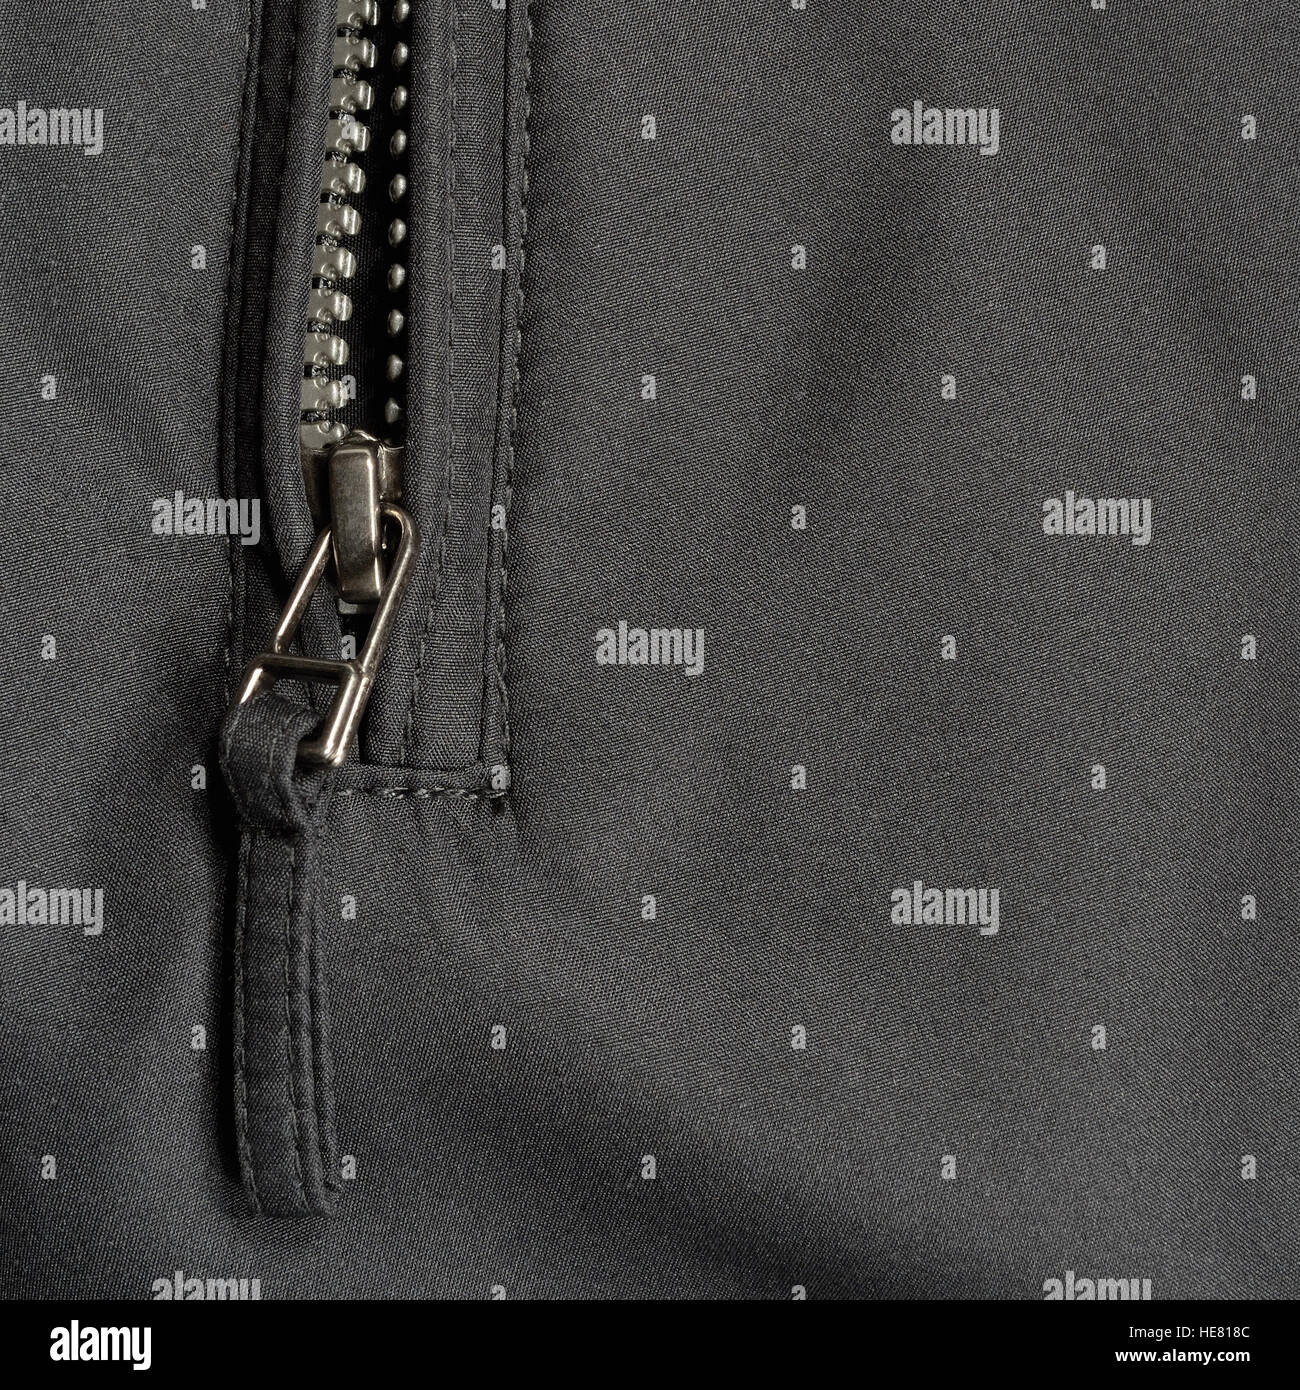 Black polyester twill fabric texture background, open jacket zipper ...